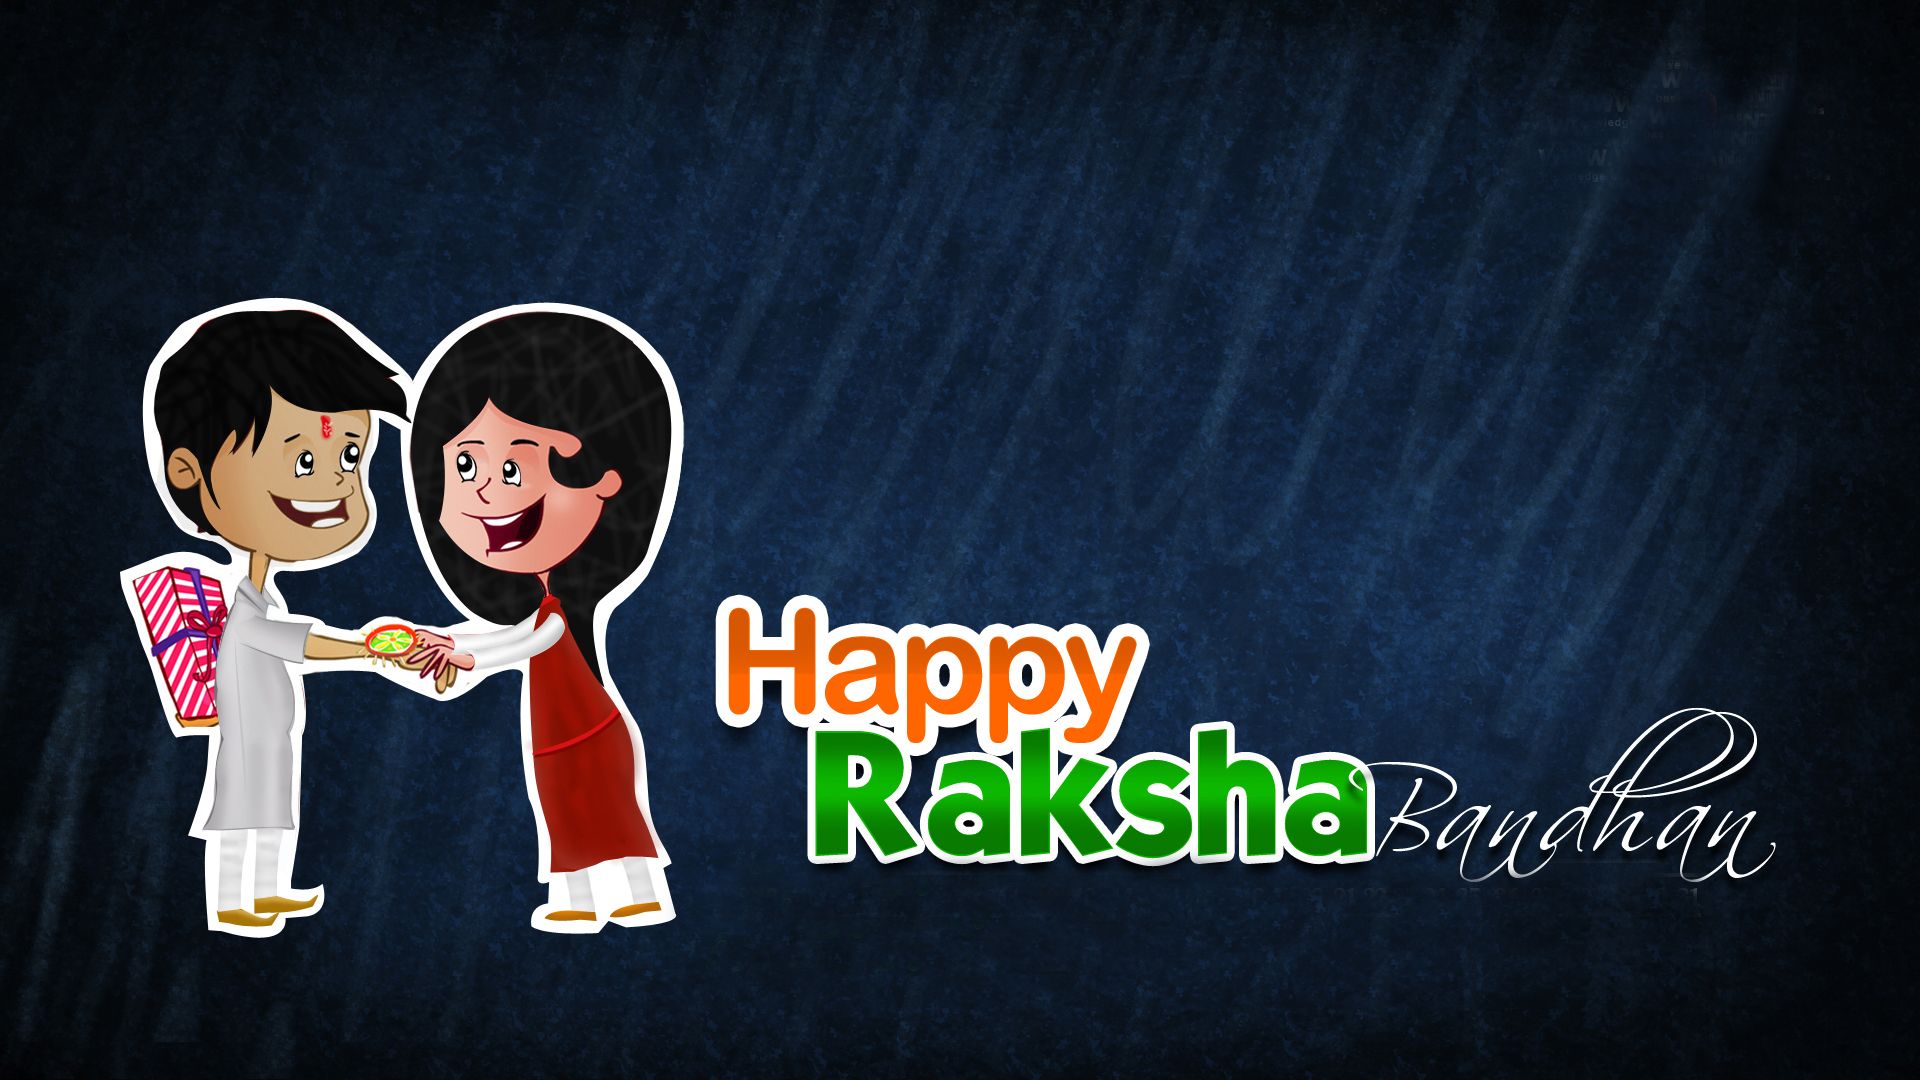 Happy Raksha Bandhan Images Animated - 1920x1080 Wallpaper 